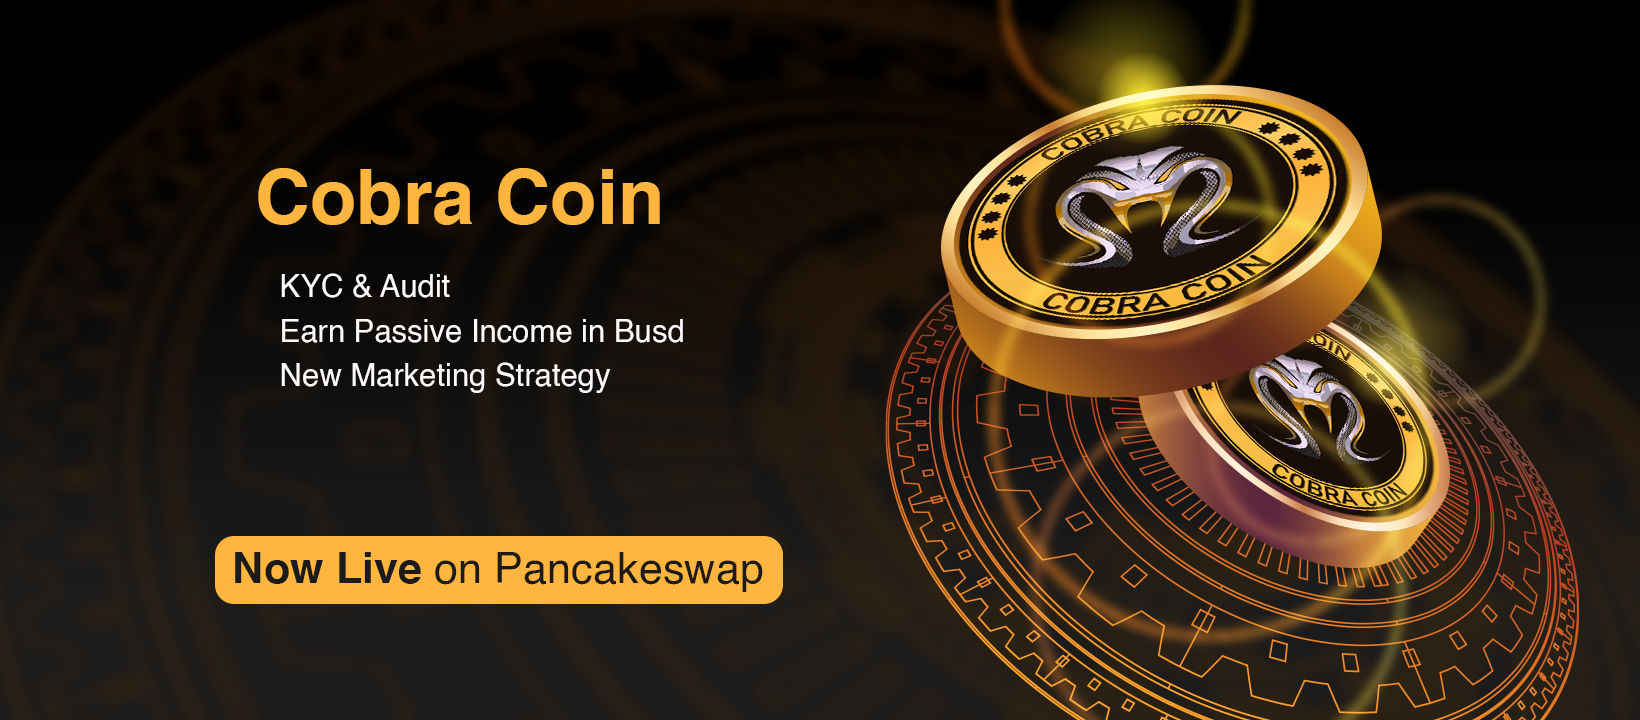 Cobra Coin, Monday, February 14, 2022, Press release picture